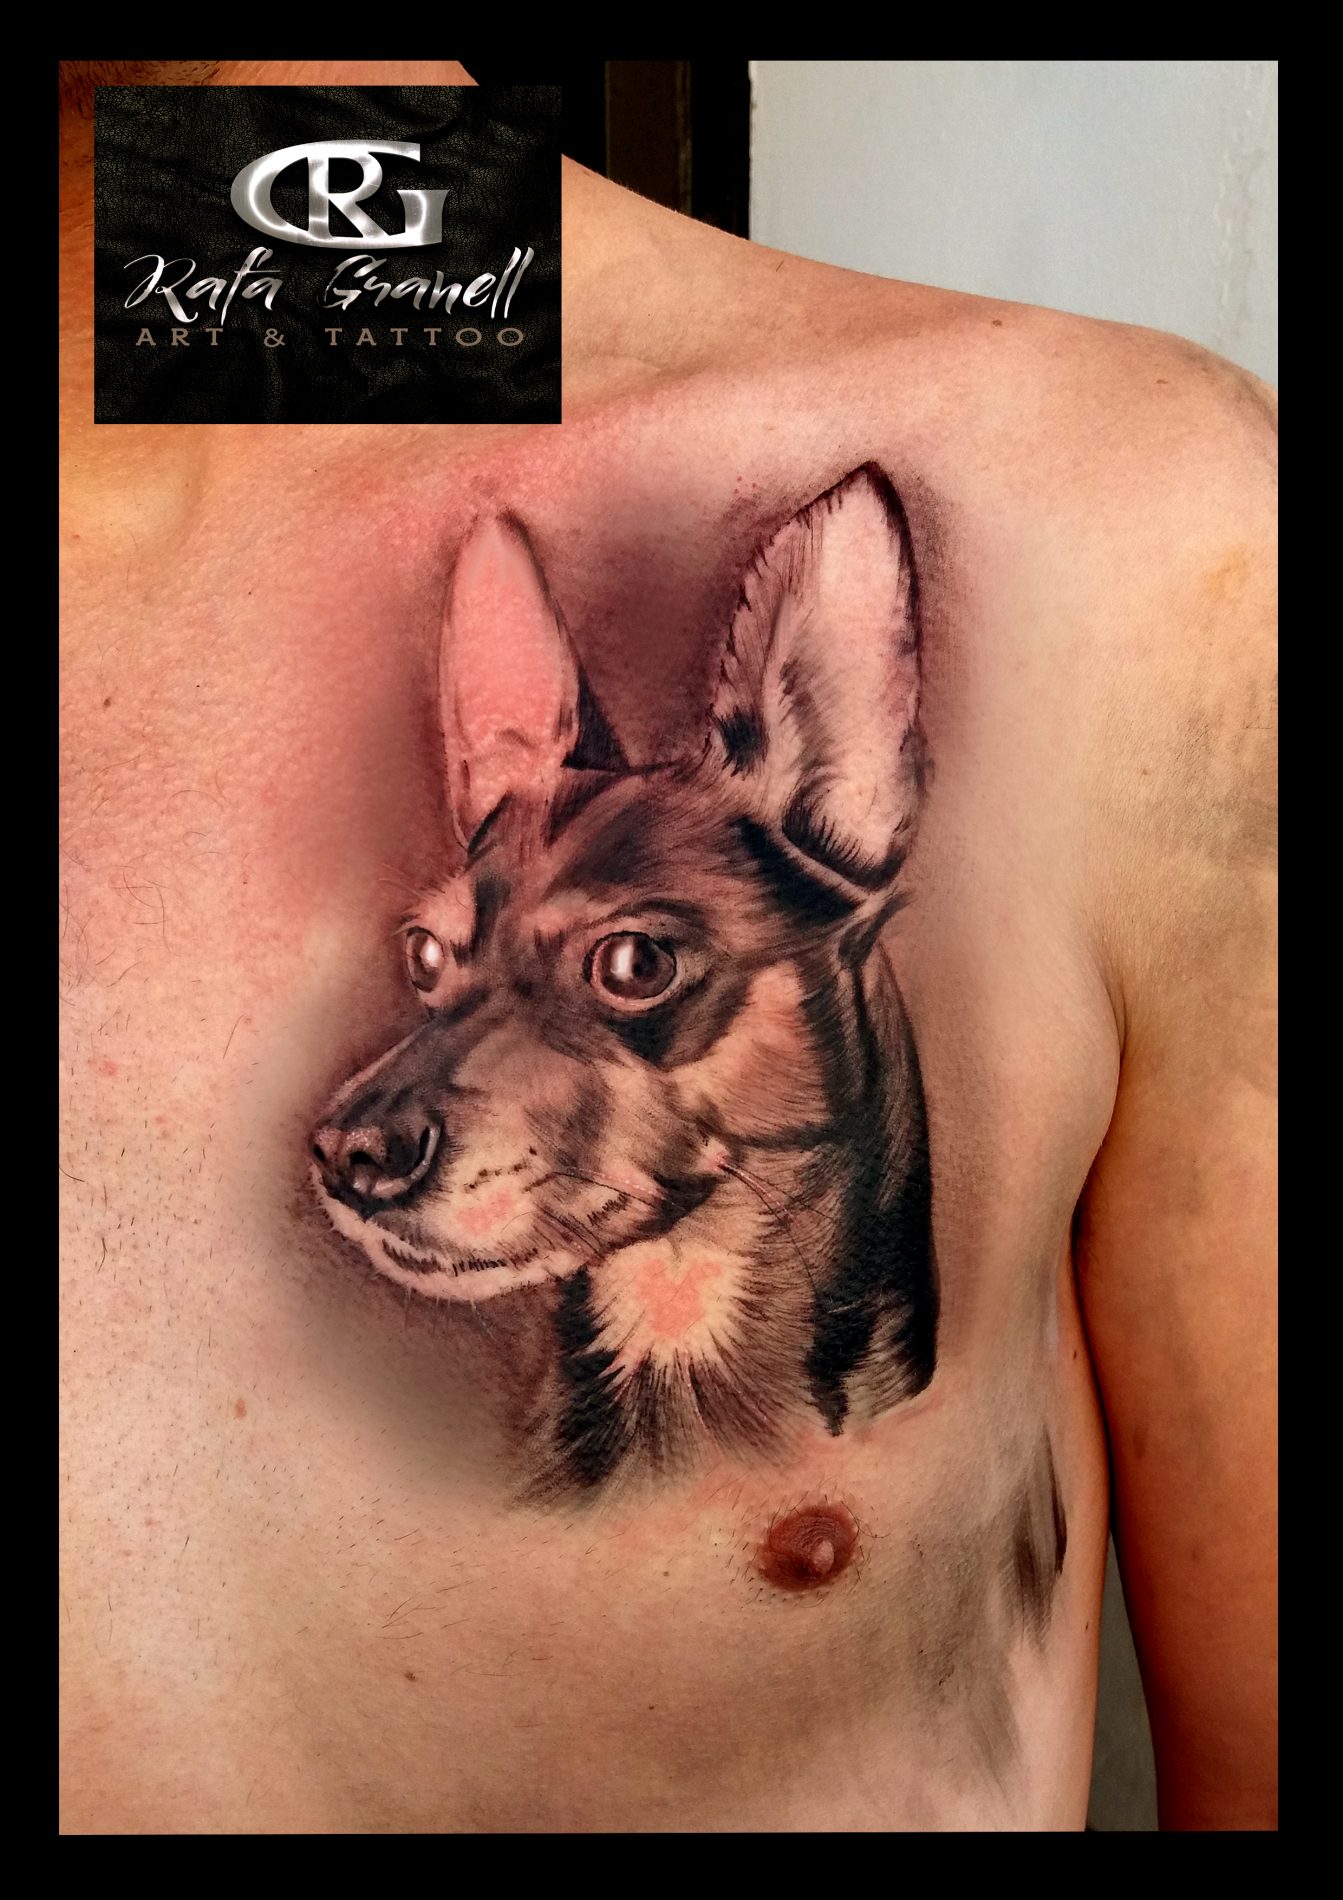 tatuajes#realistas#animales#perros#pincher#tattoo#perro#pecho#realistas#tattoo#realista#blanco#negro#retratos#realismo#valencia#españa#tatuador#valenciano#español#rafa#granell#rgtattoo#